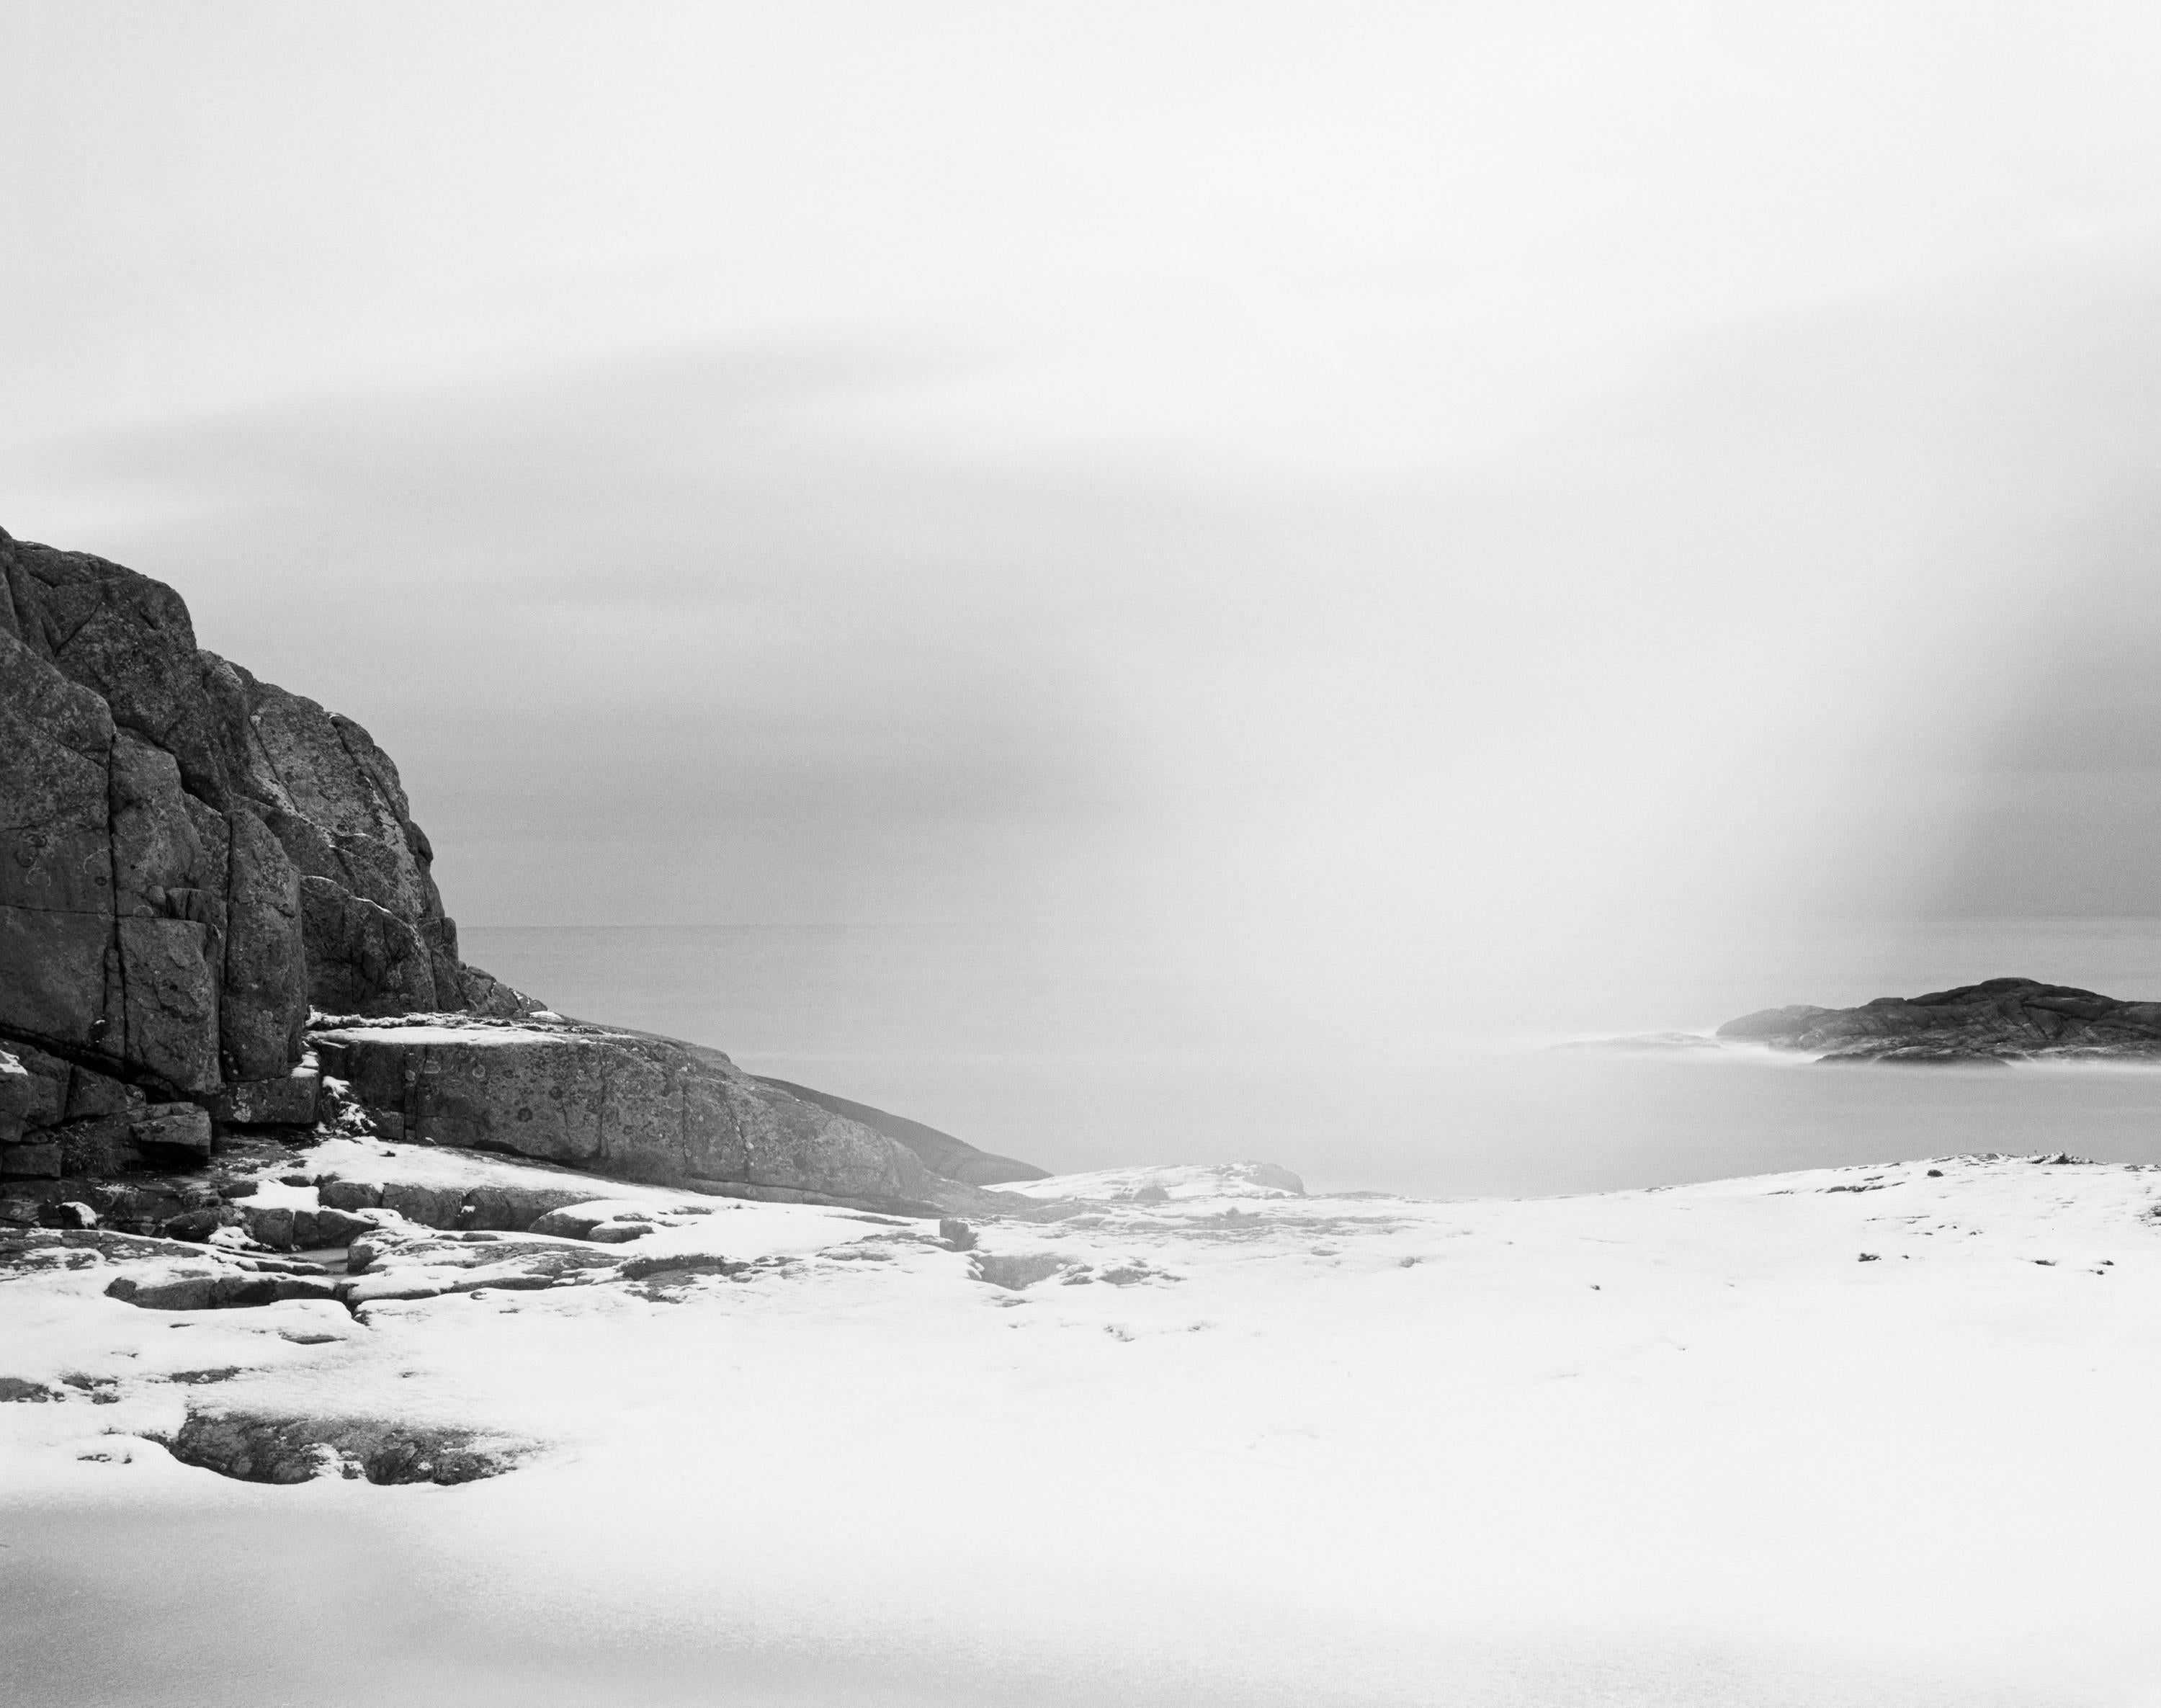 Ole Brodersen Landscape Photograph - String, Cloth, and Kite 03 - serene Scandinavian black and white landscape photo